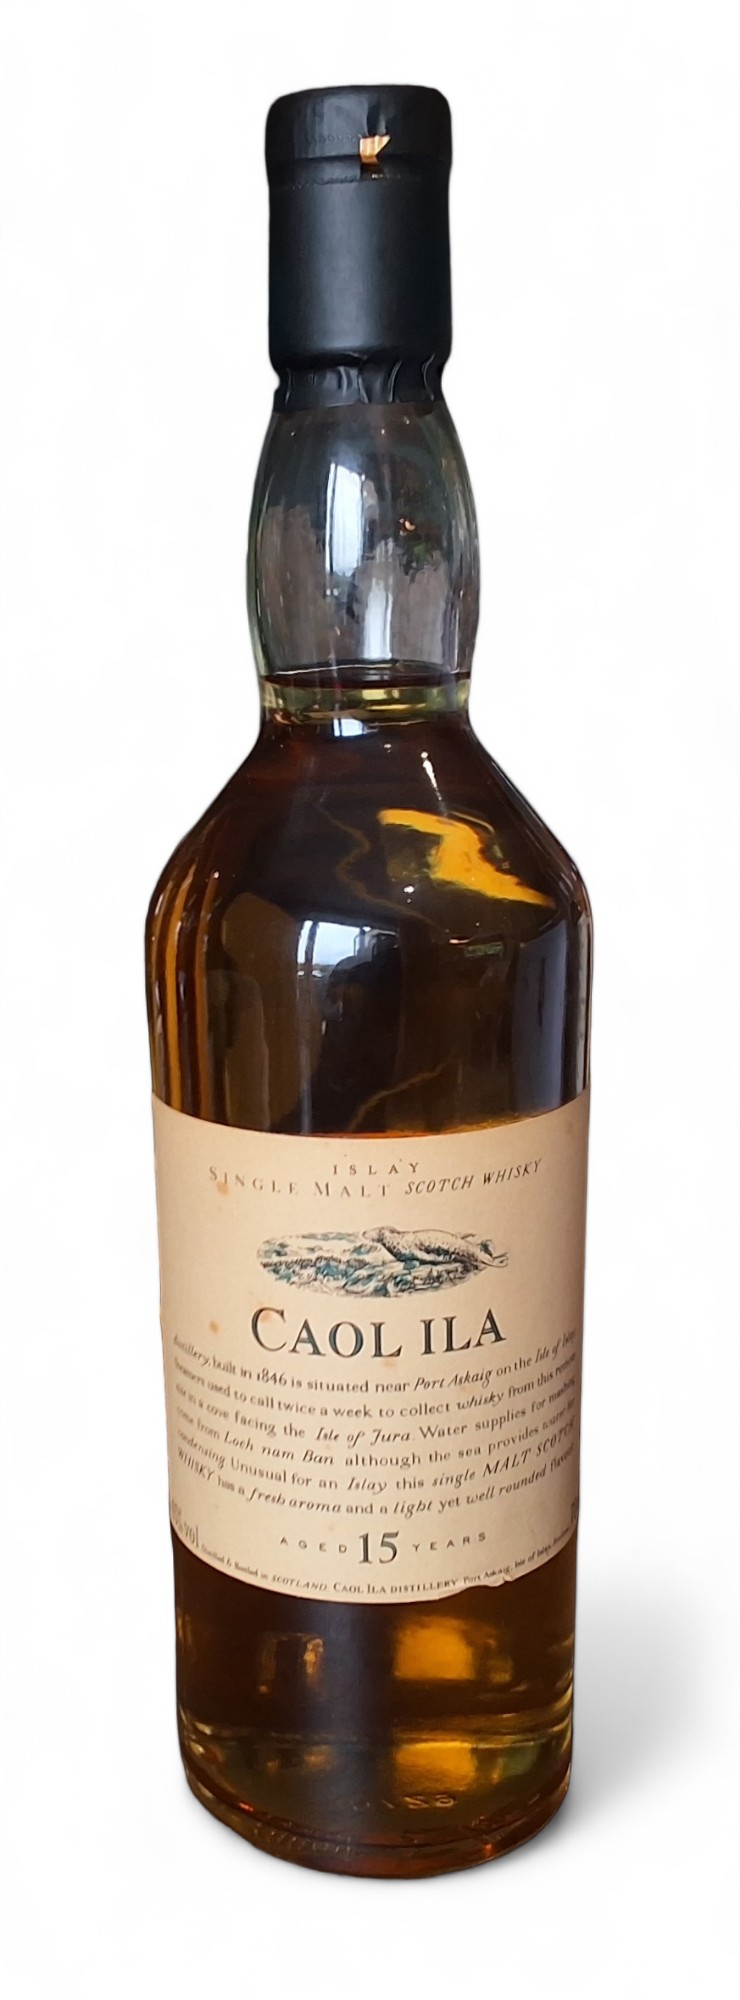 Caol Ila 15 year old, Islay Single Malt Scotch Whisky, 43% vol, 70cl